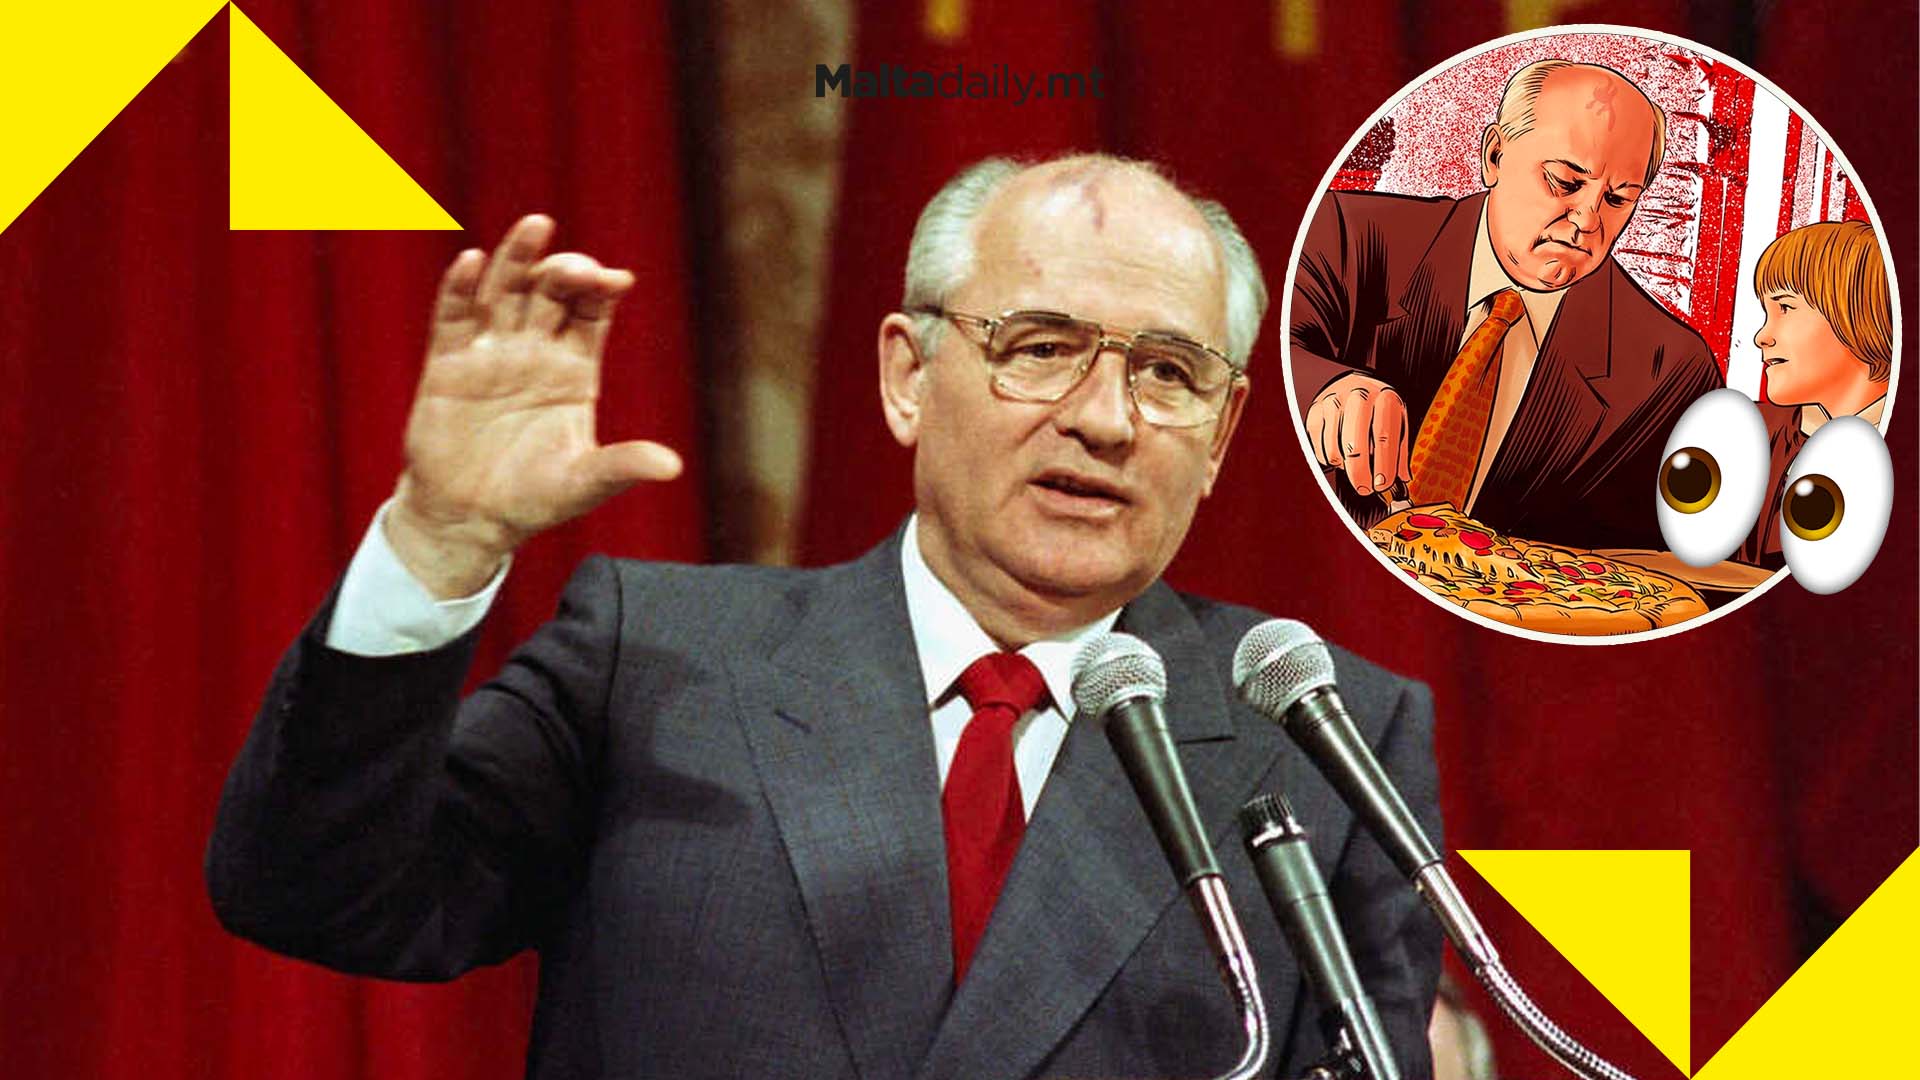 Malta, Pizza Hut and Soviets: 7 facts about Mikhail Gorbachev